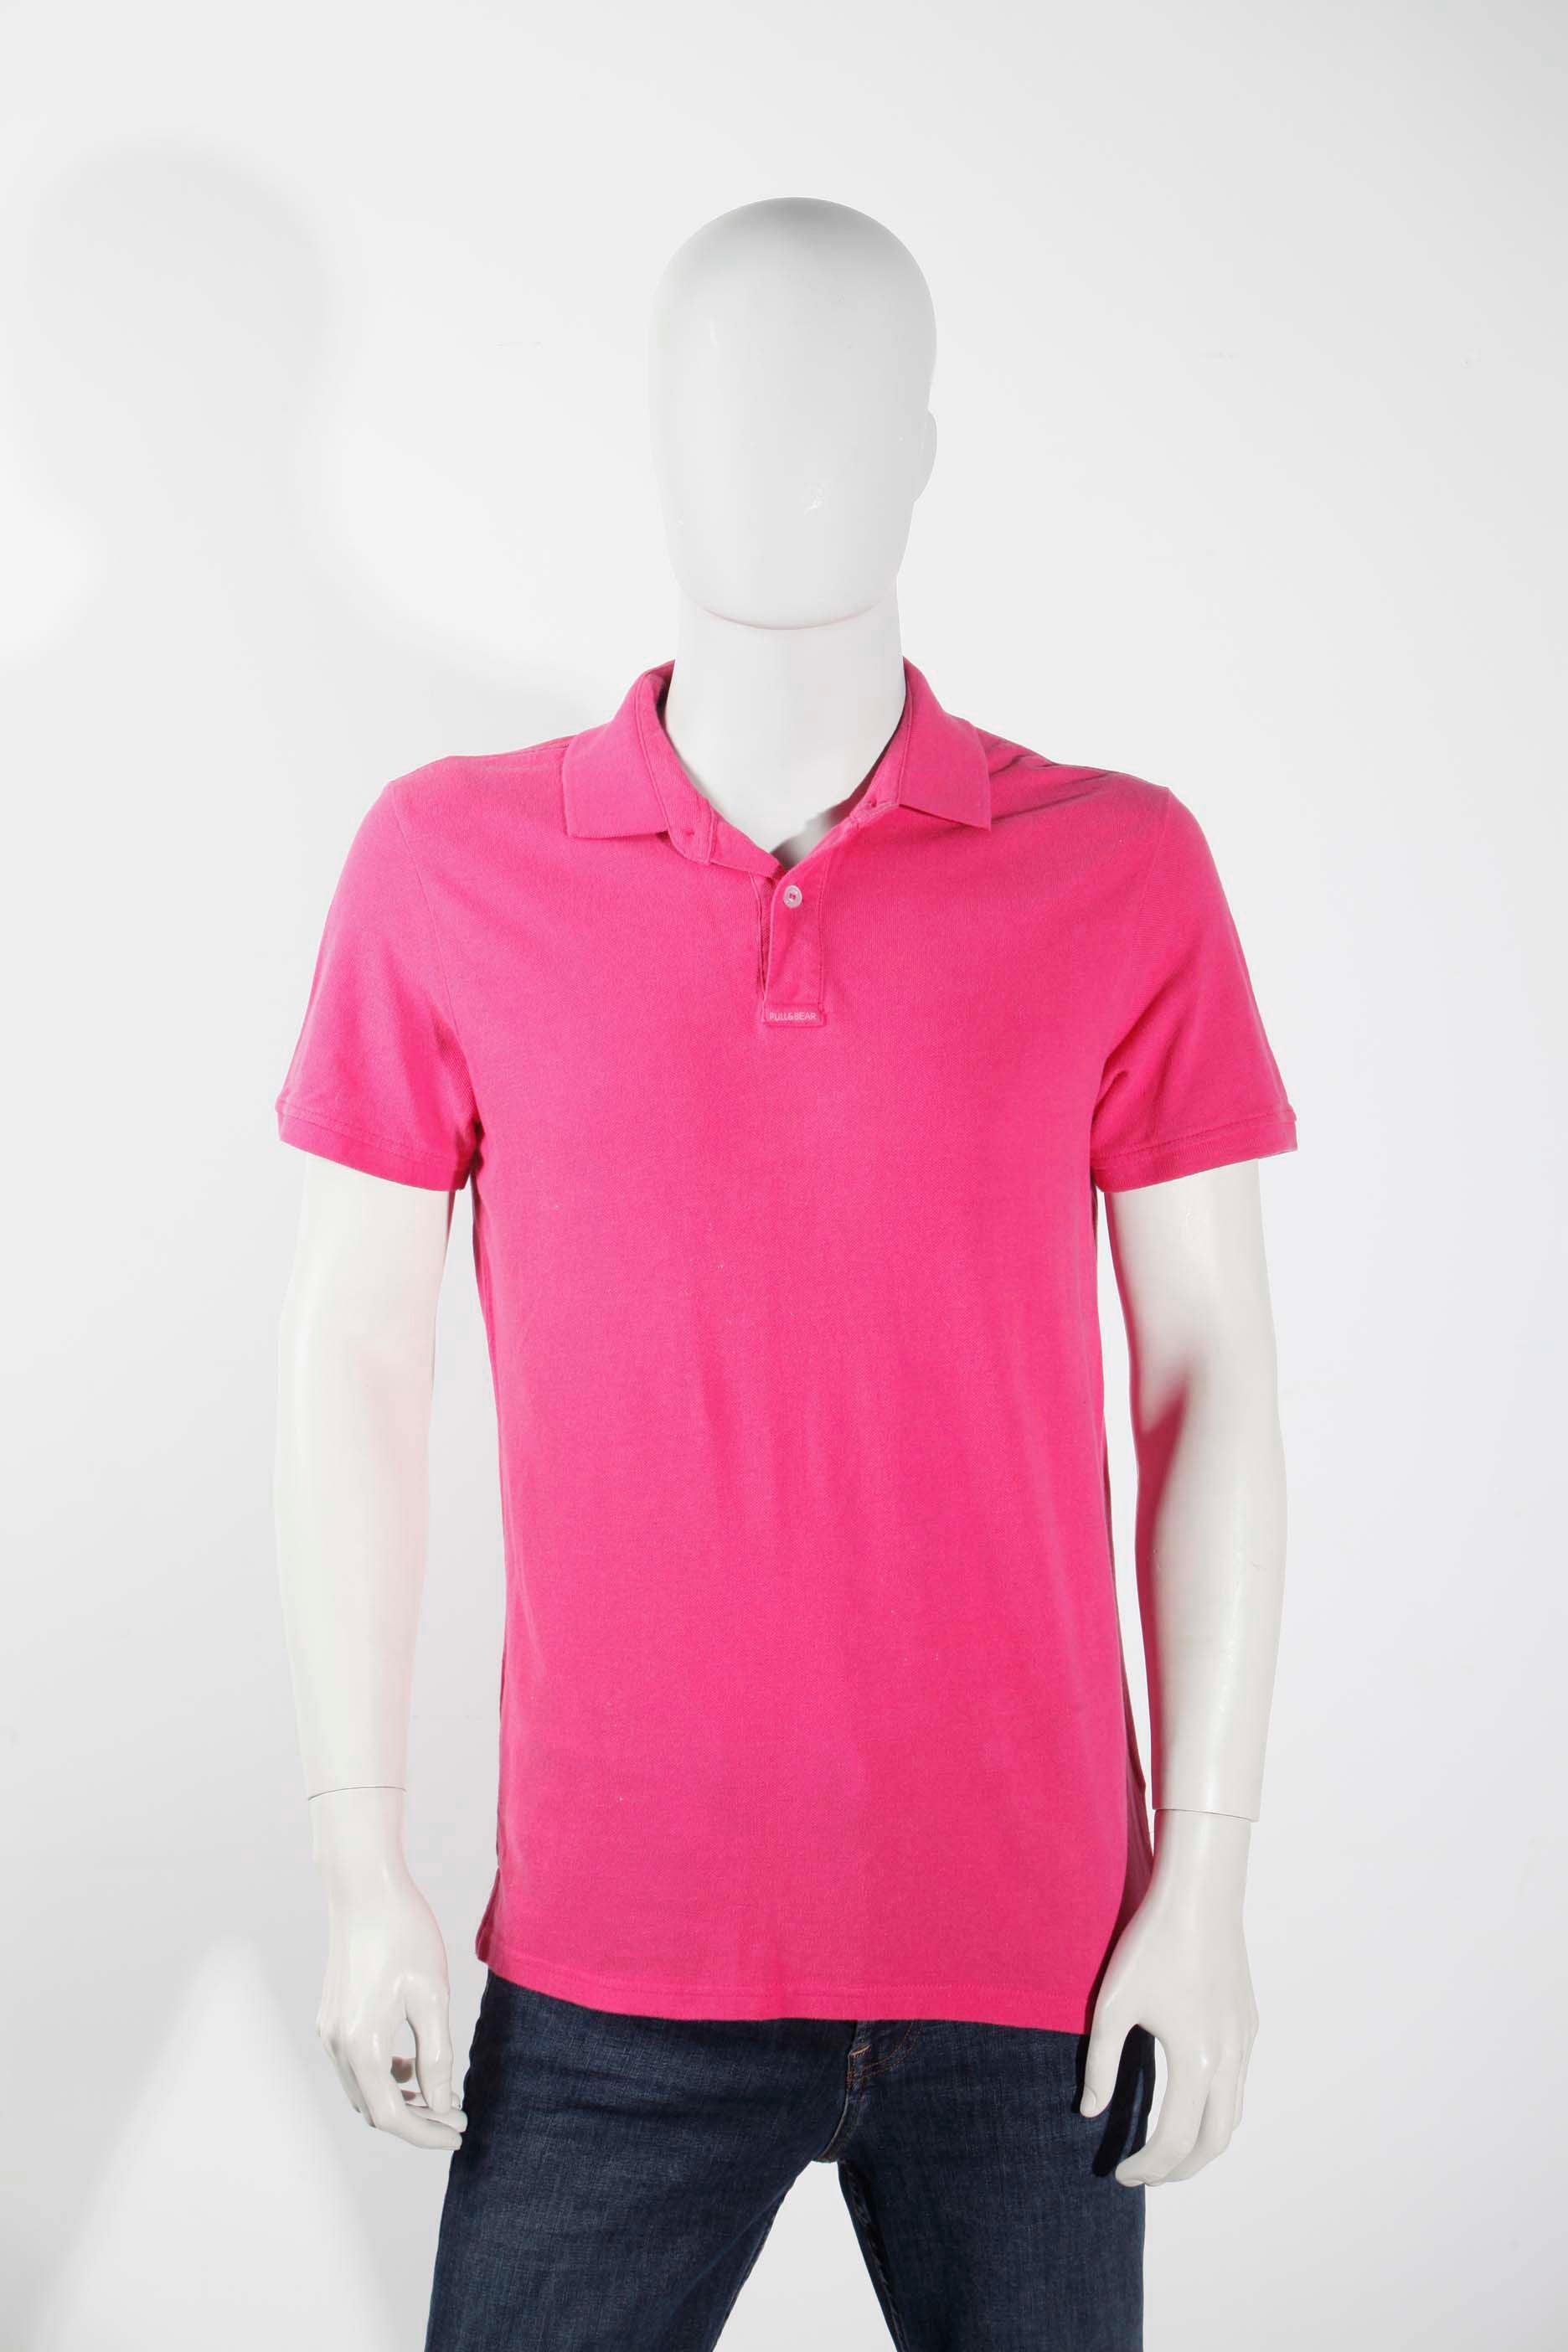 Mens Bright Pink Polo Shirt (Large)